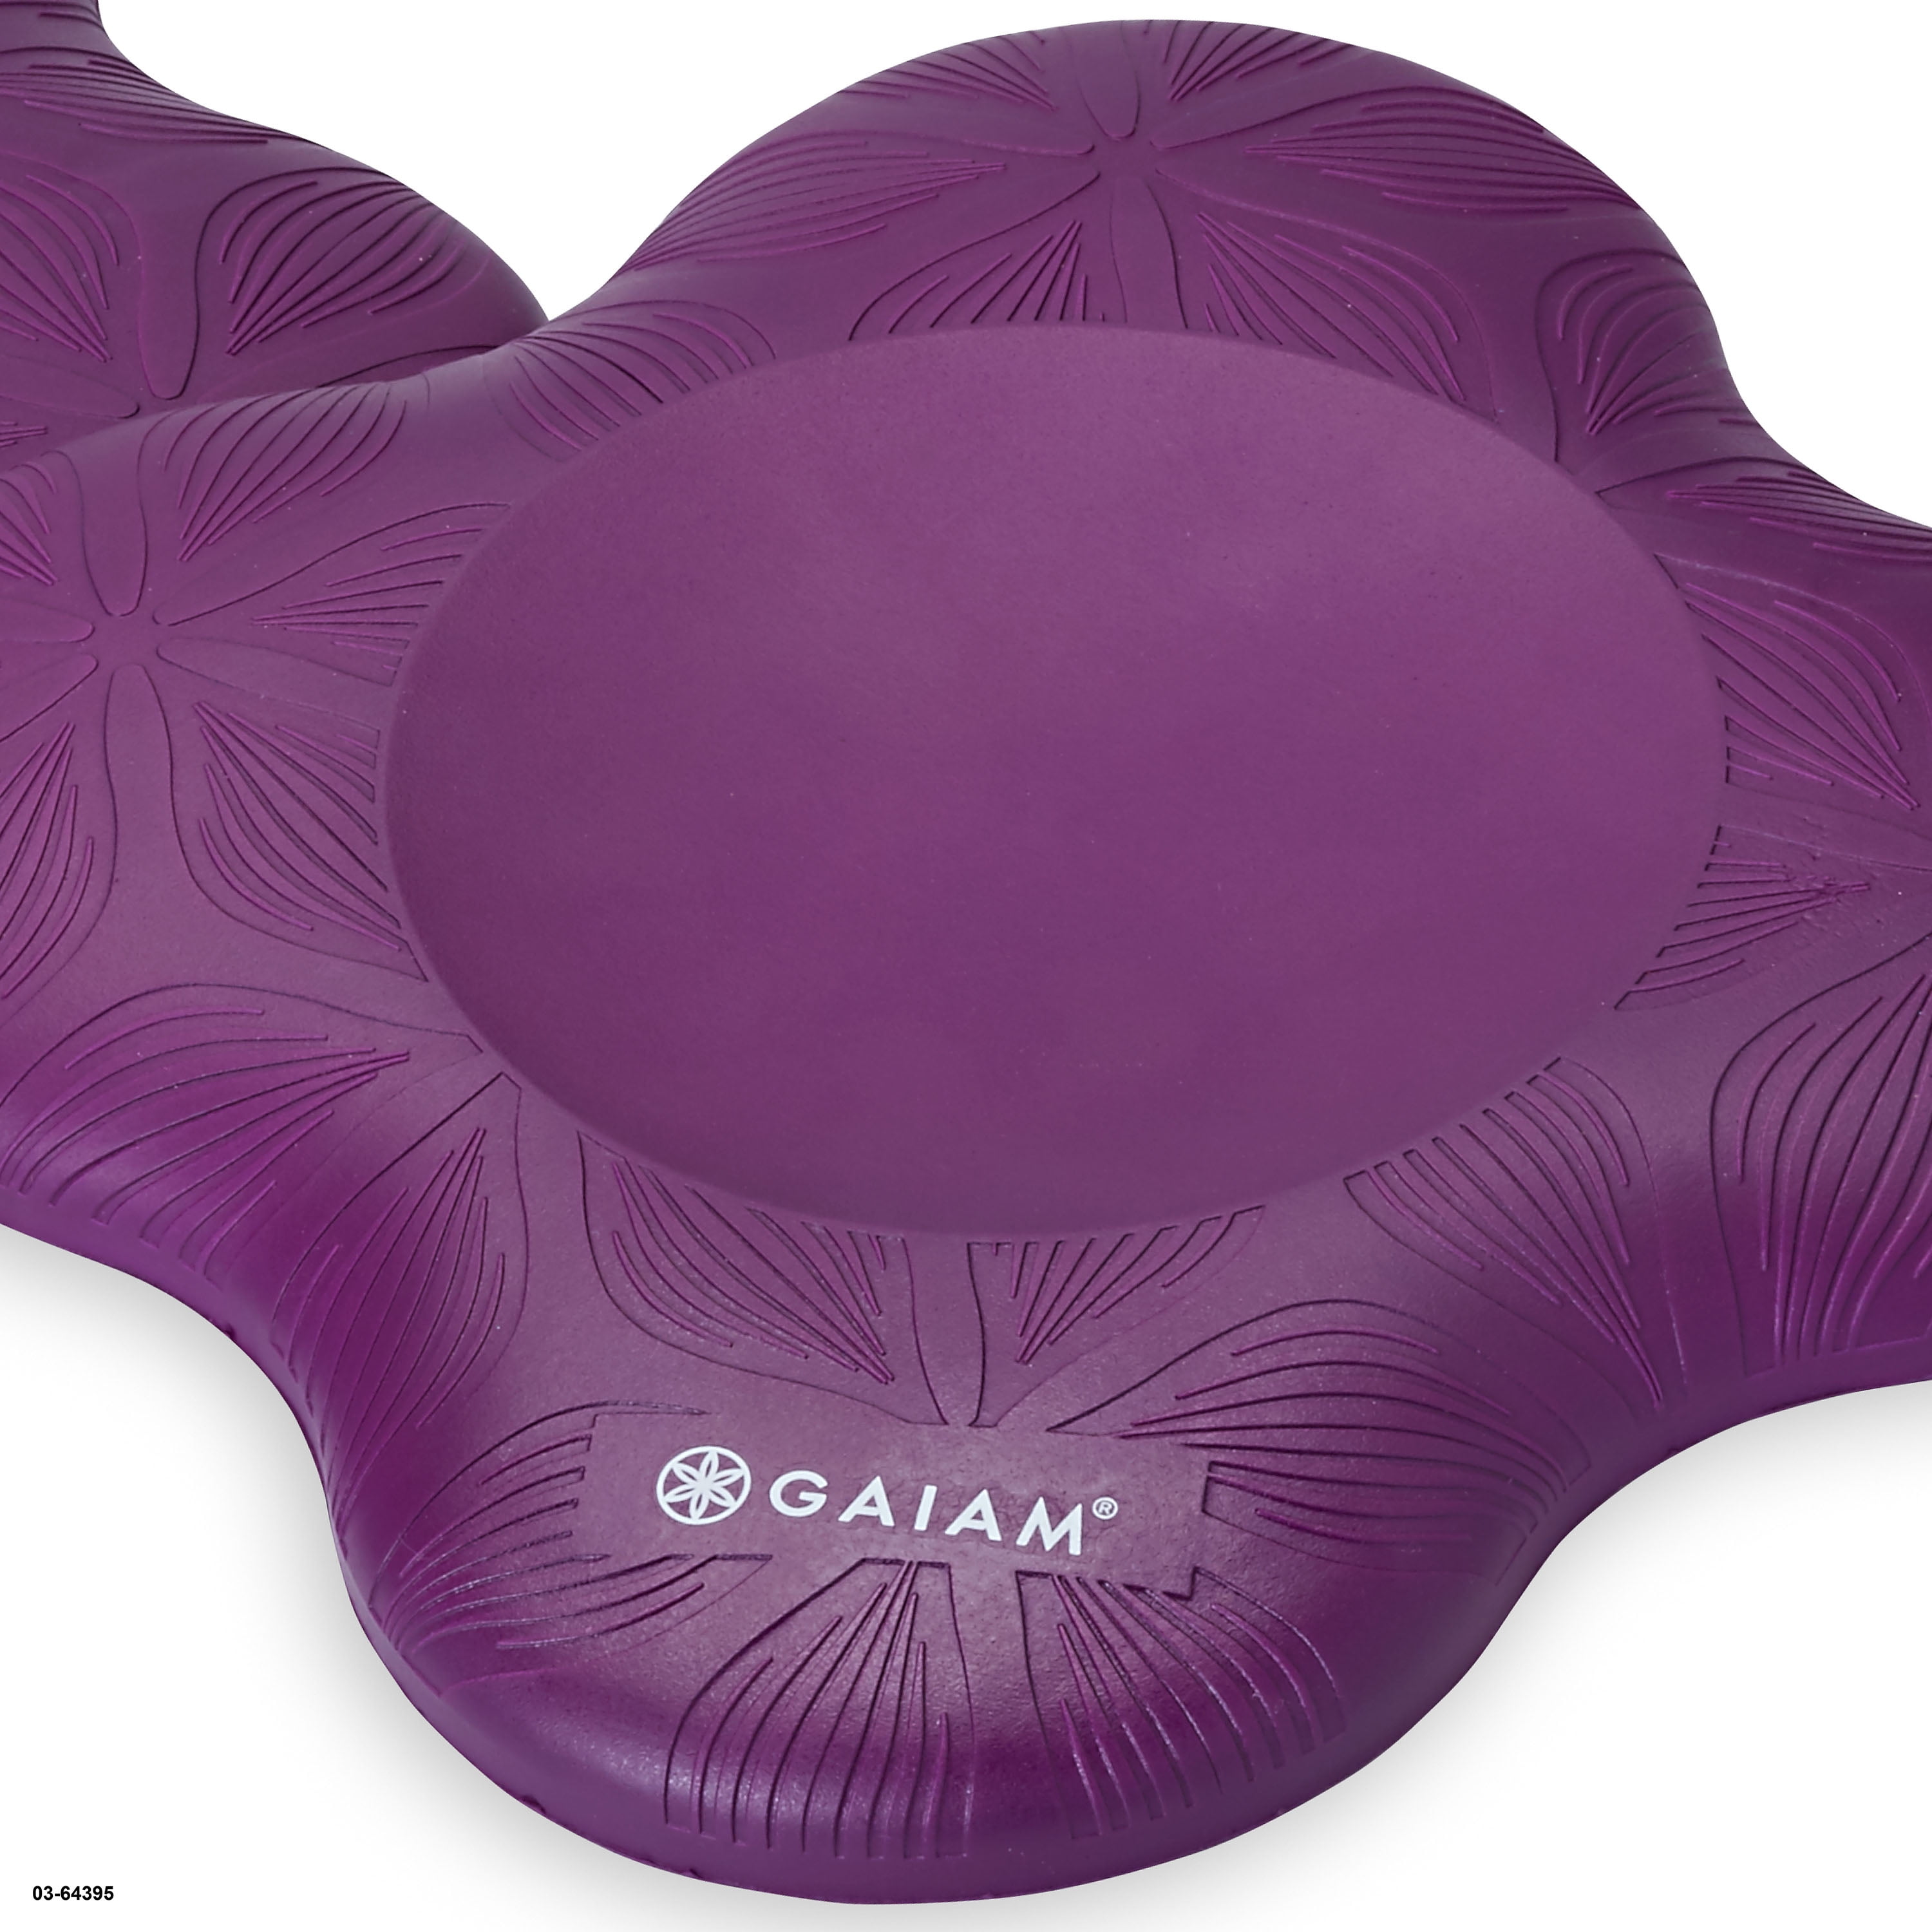 Gaiam Yoga Knee Pads (Set of 2) - Yoga Props and Accessories for Women /  Men Cus